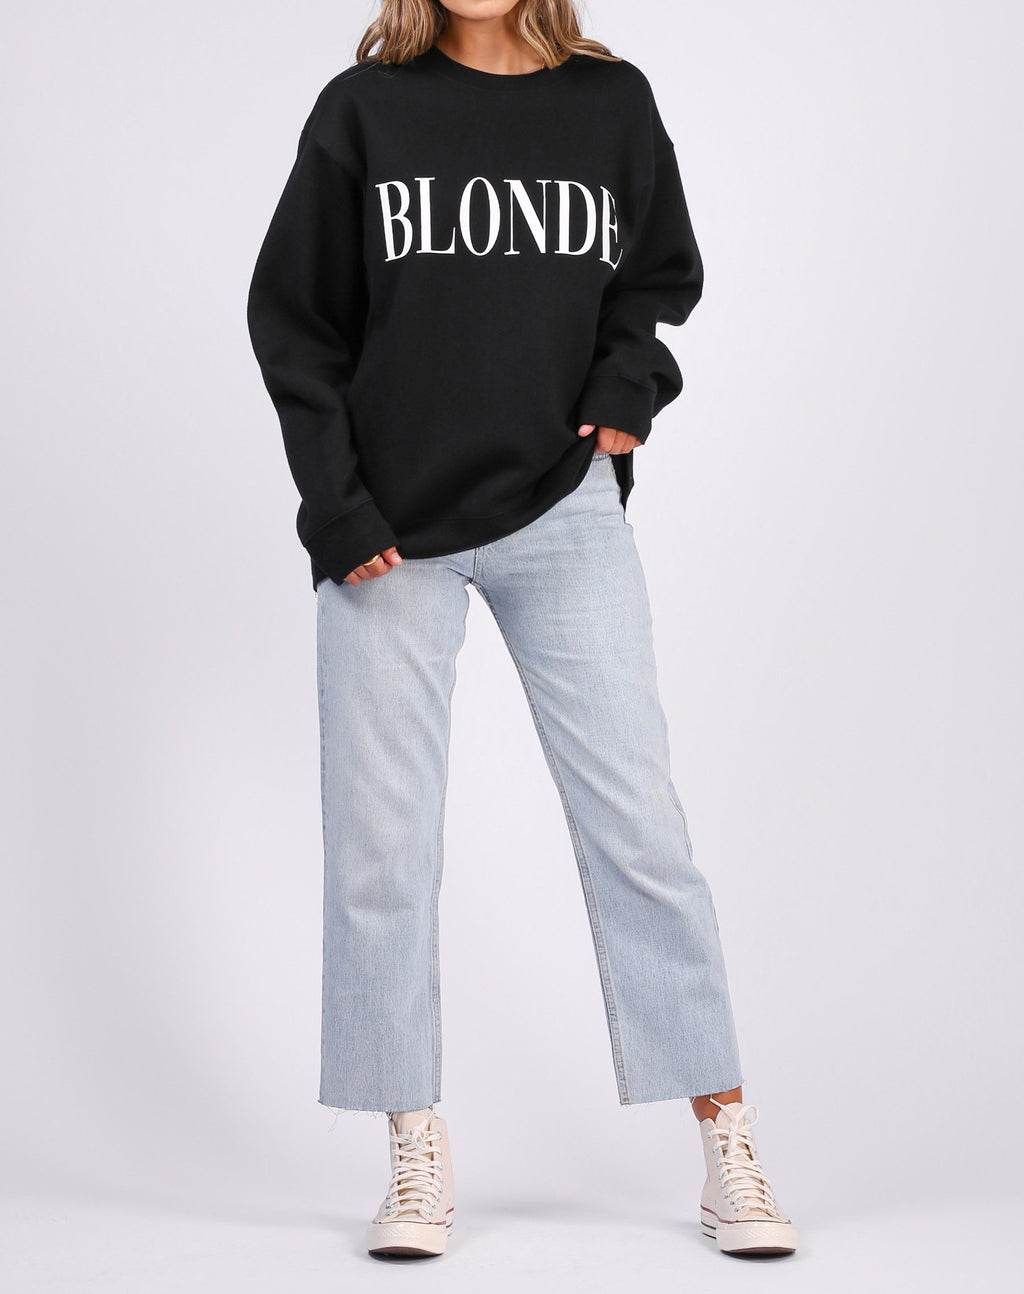 Brunette The Label || "BLONDE SERIF" || Big Sister Crew Neck Sweatshirt (Black)